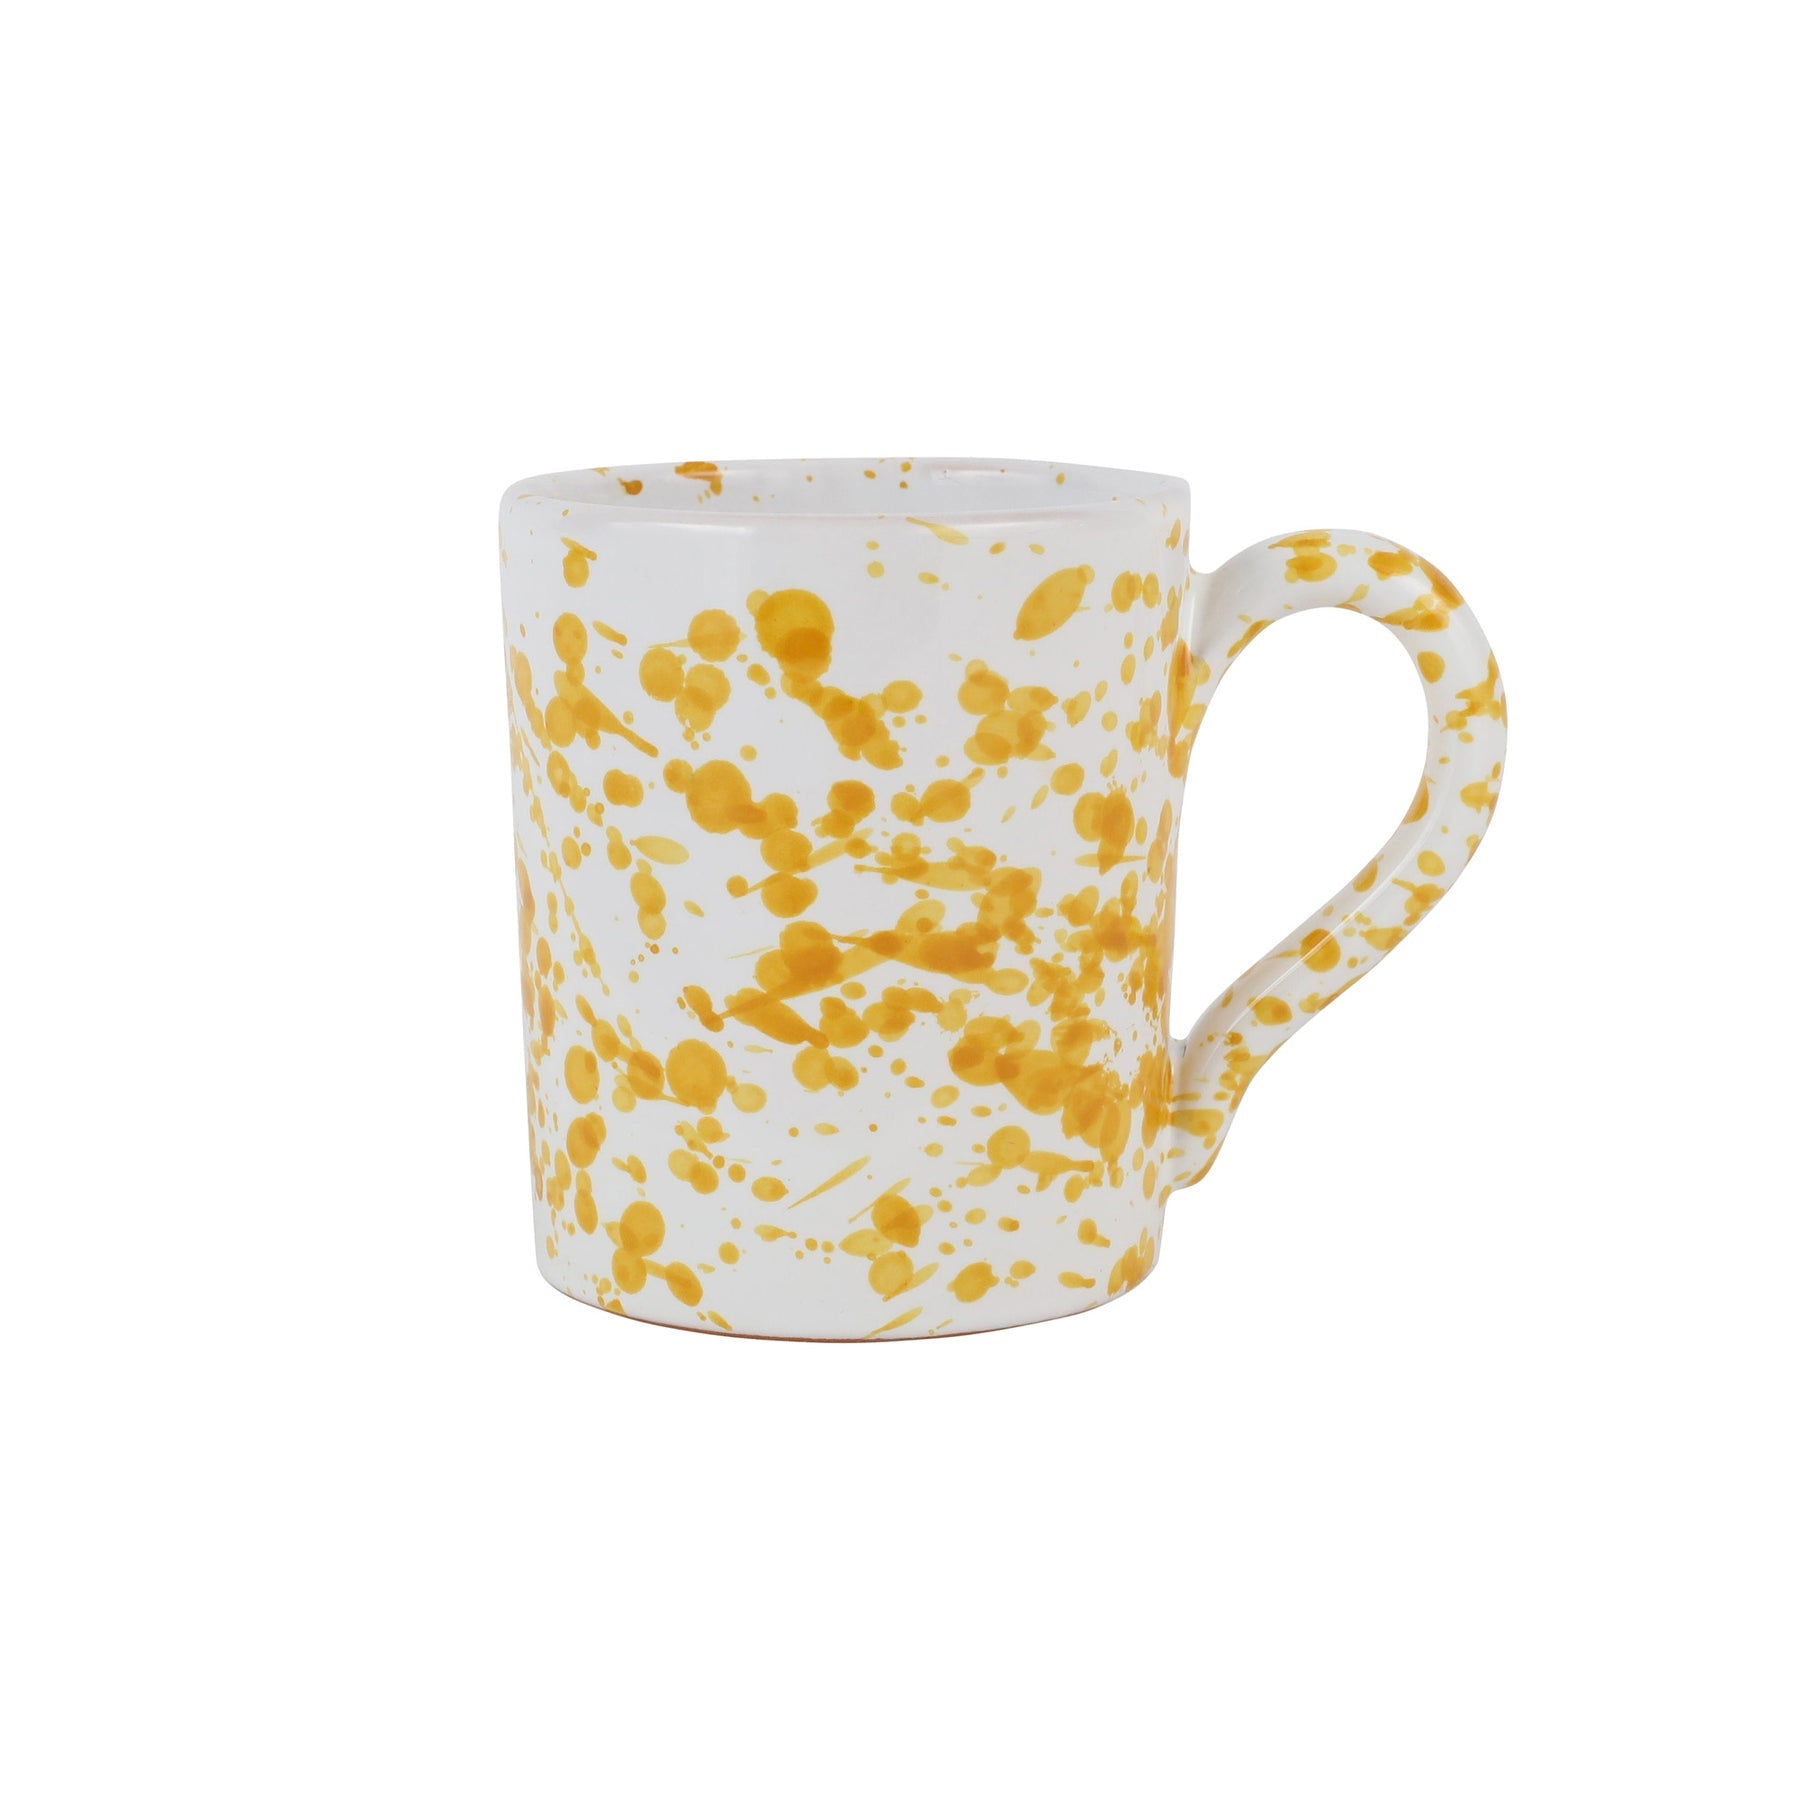 Amalfitana Yellow Splatter Mug